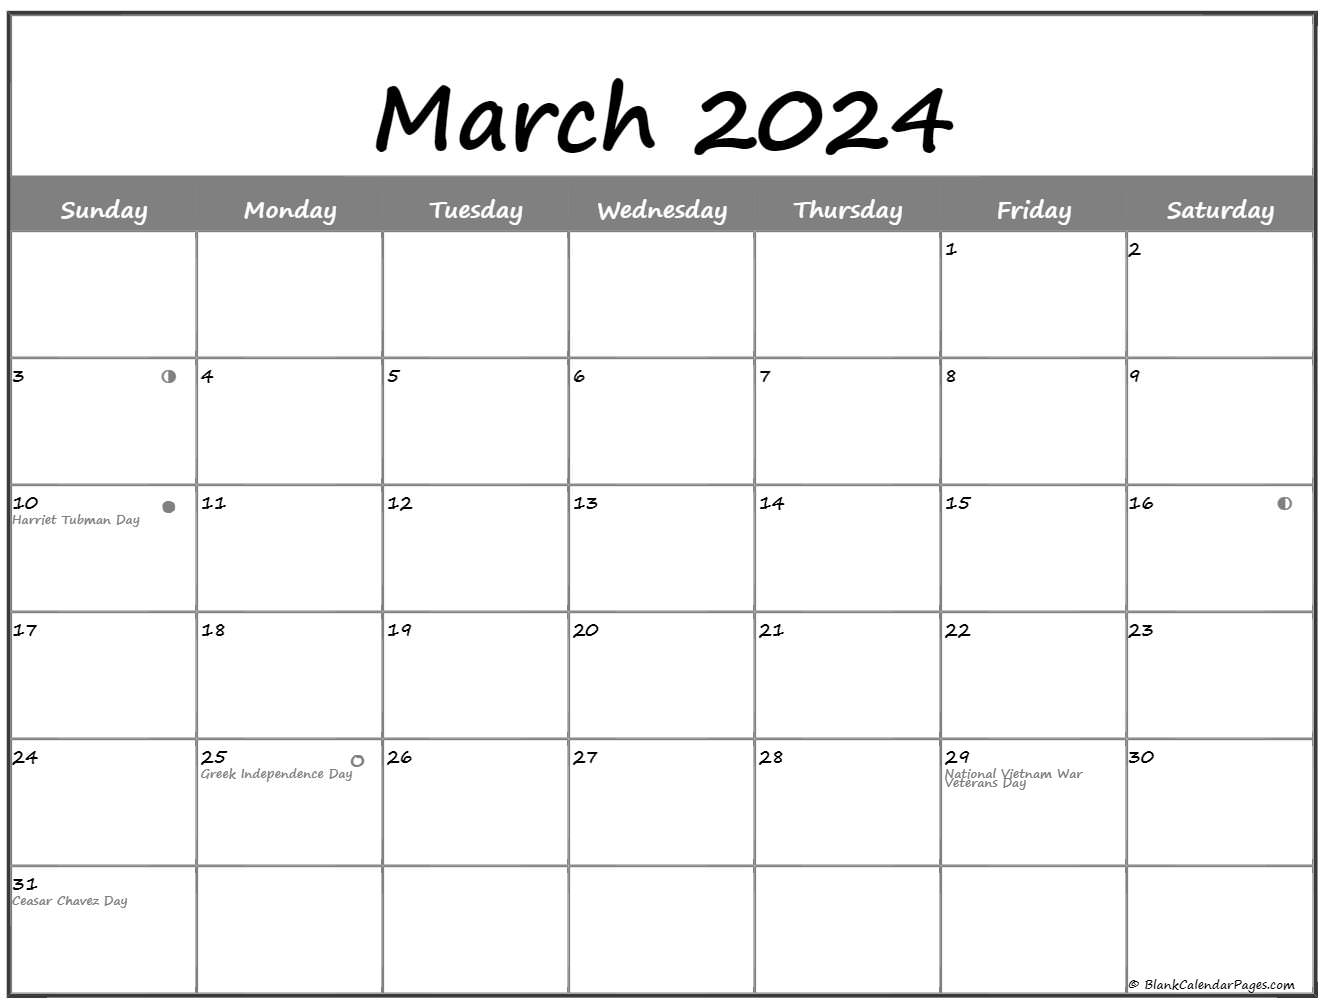 In March 2024 Mandi Rozella